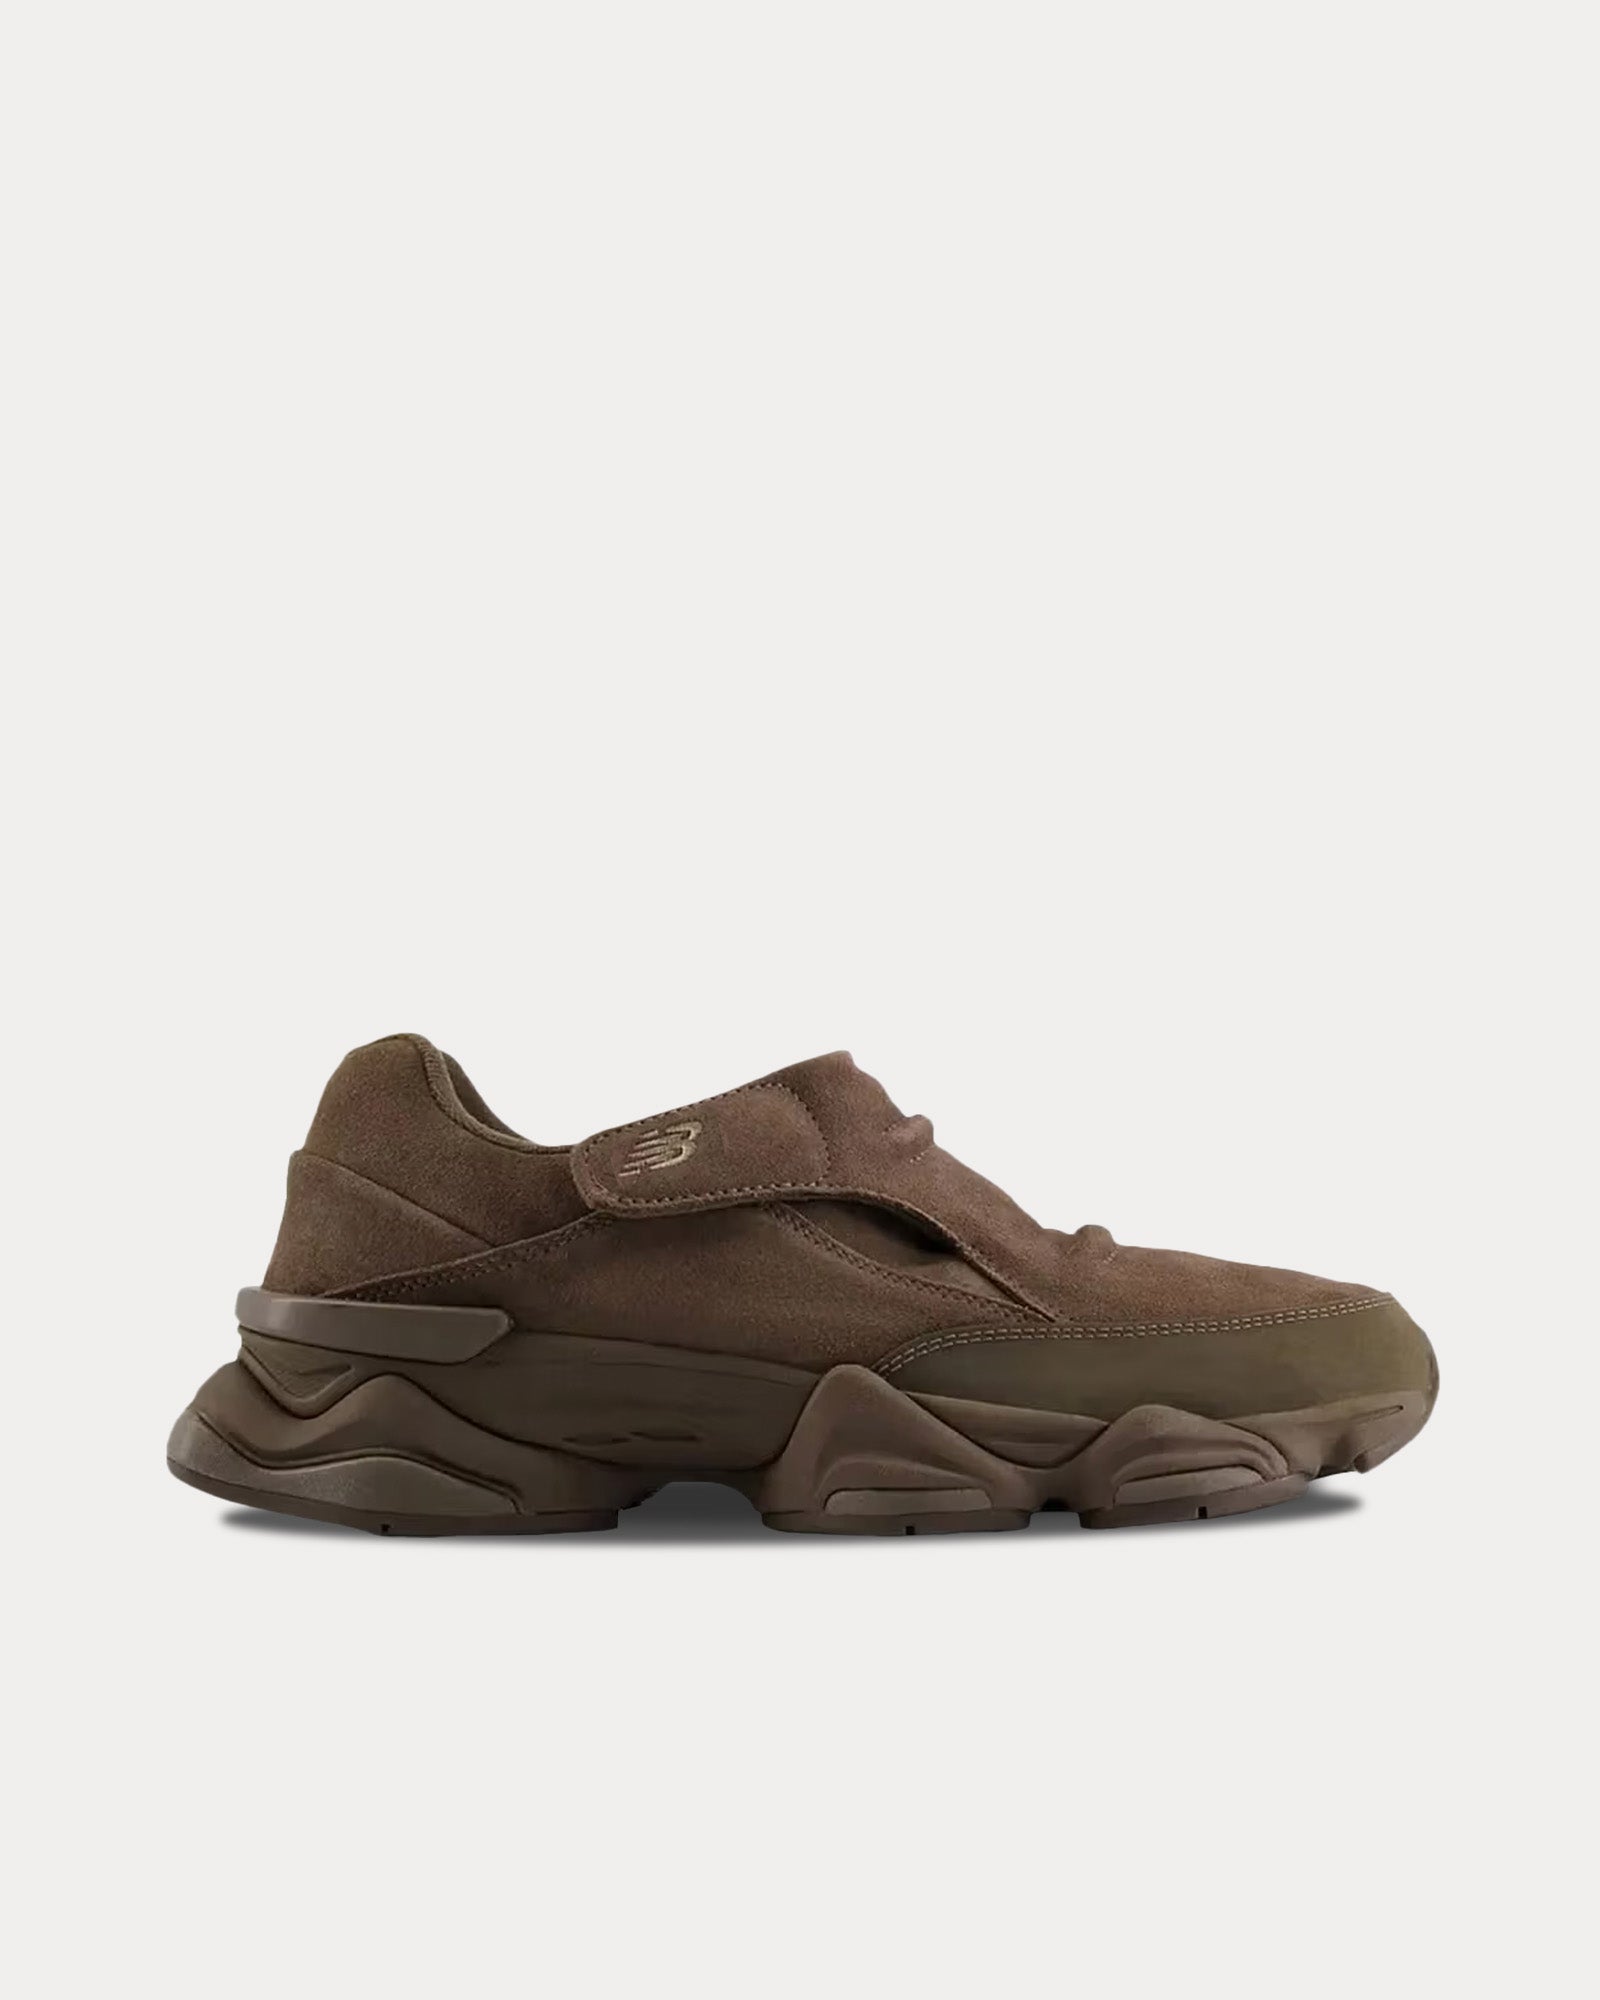 New Balance - 8040 Brown Slip On Sneakers